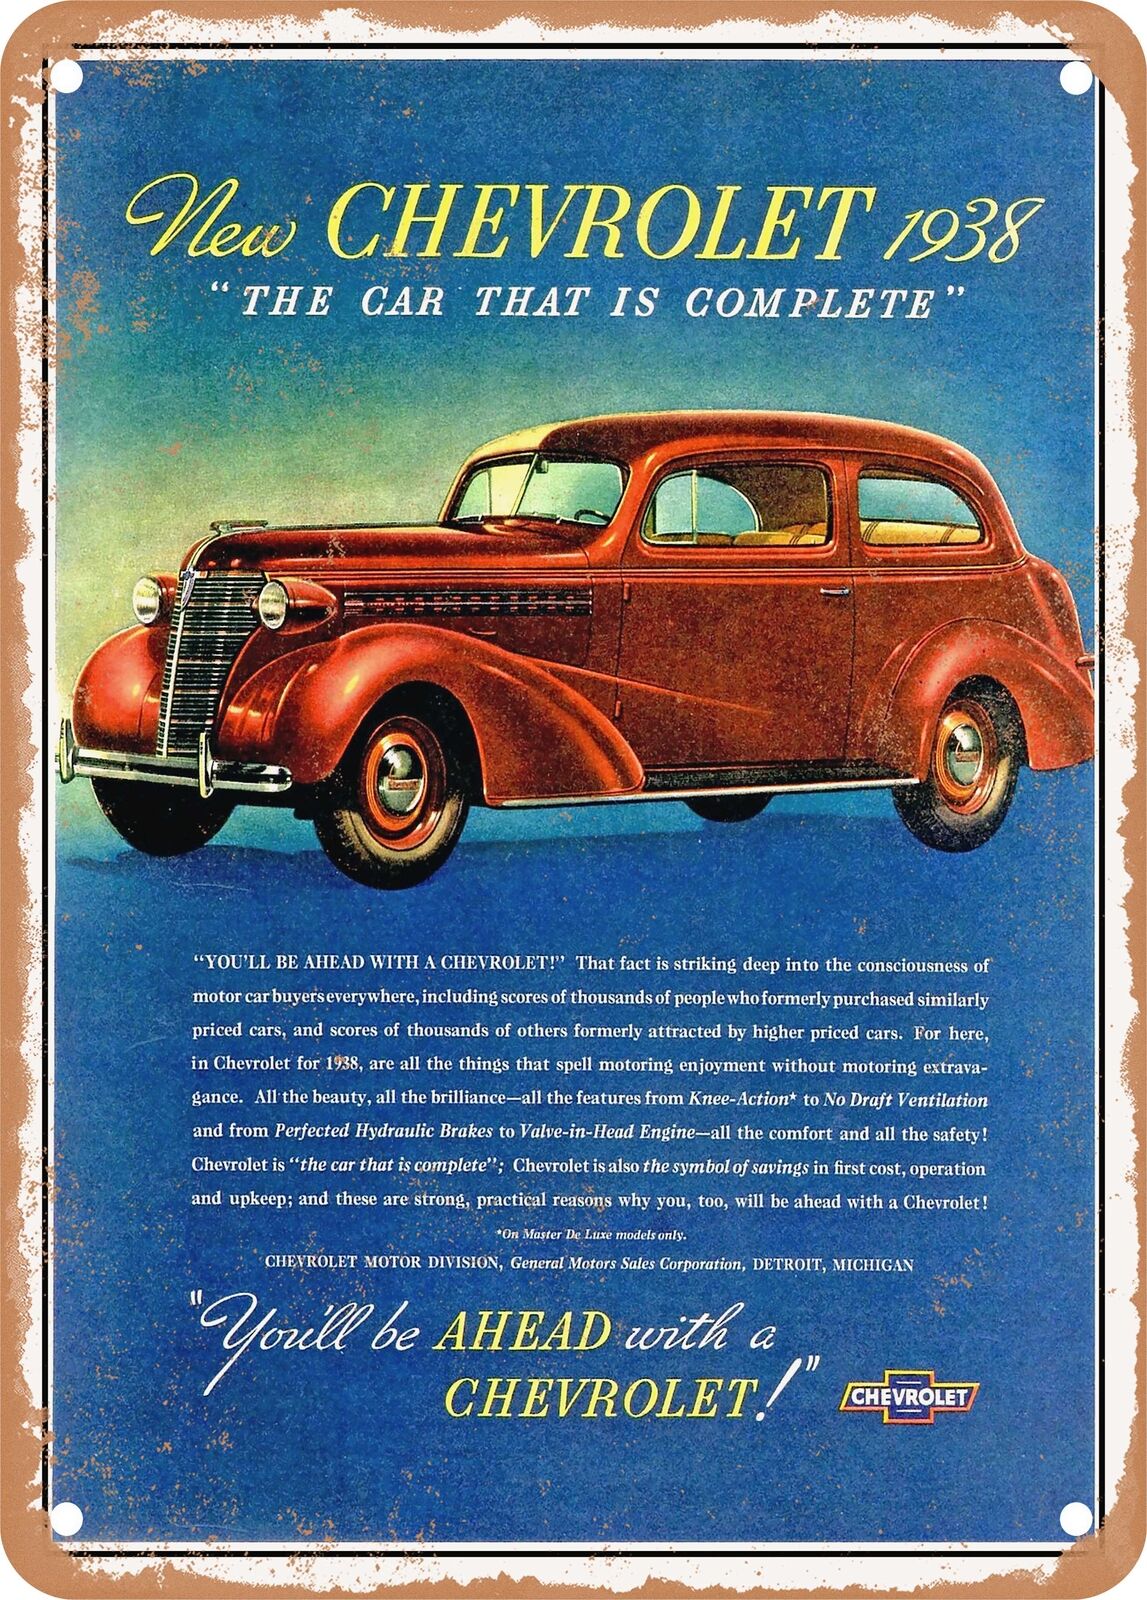 METAL SIGN - 1938 Chevy Master De Luxe Town Sedan Vintage Ad